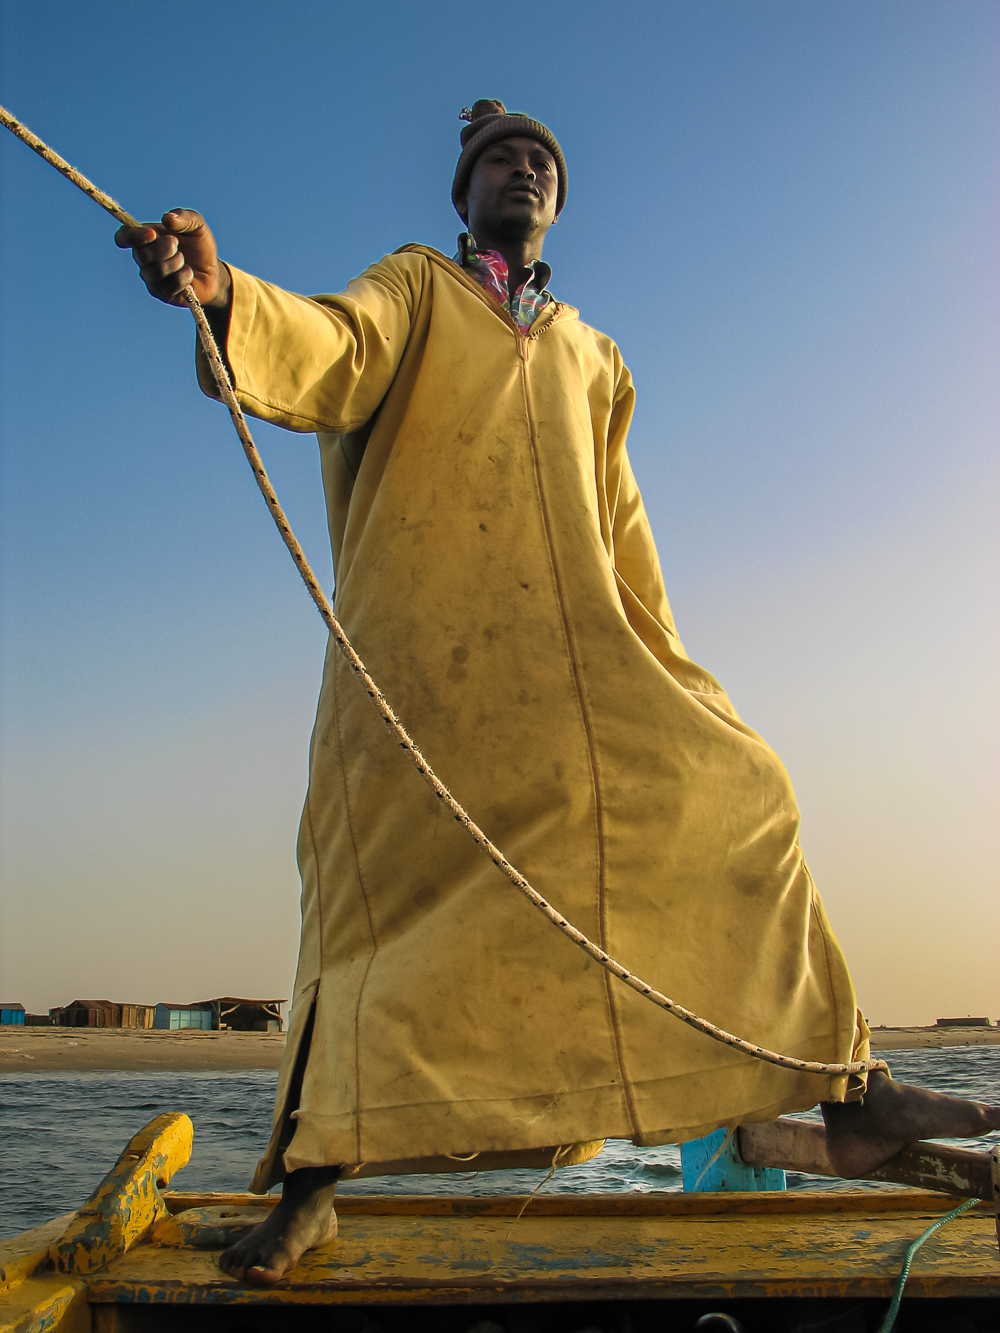 Pirogue Captain Mauritania by Neil Harris